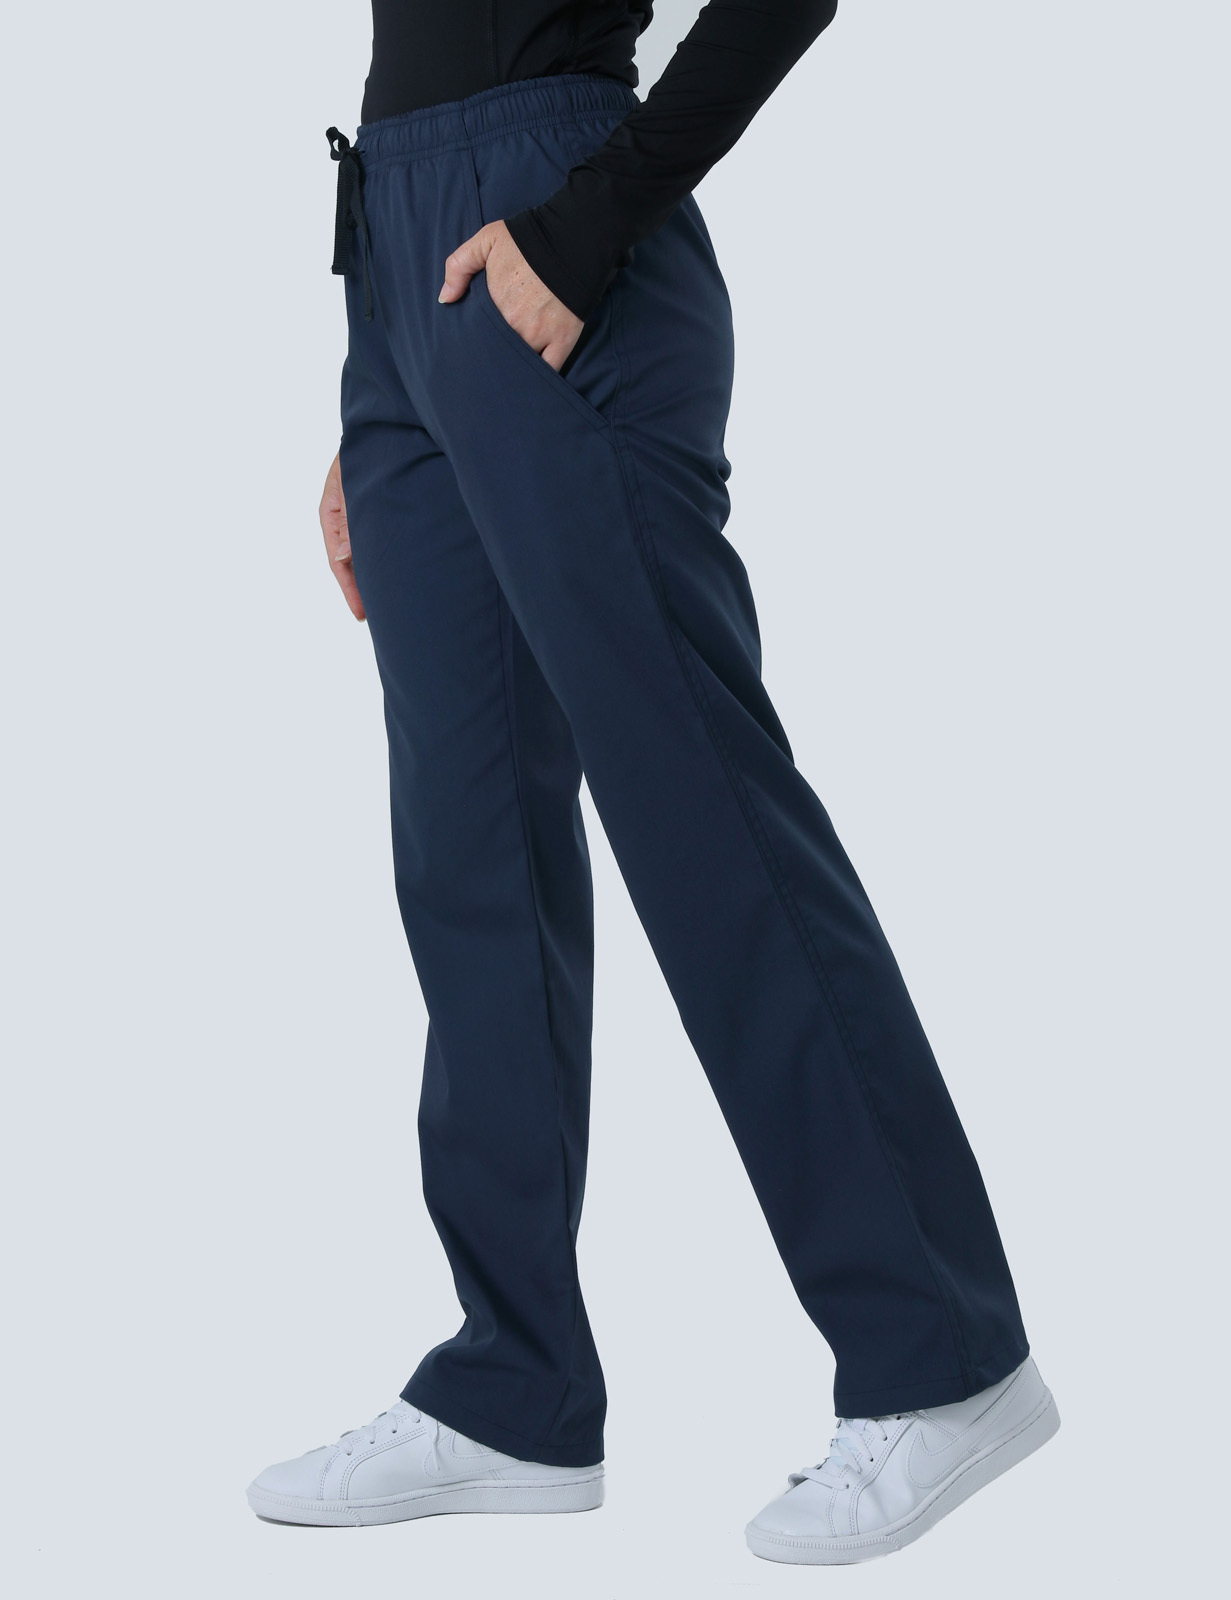 Women's Regular Cut Pants - Navy - X Large